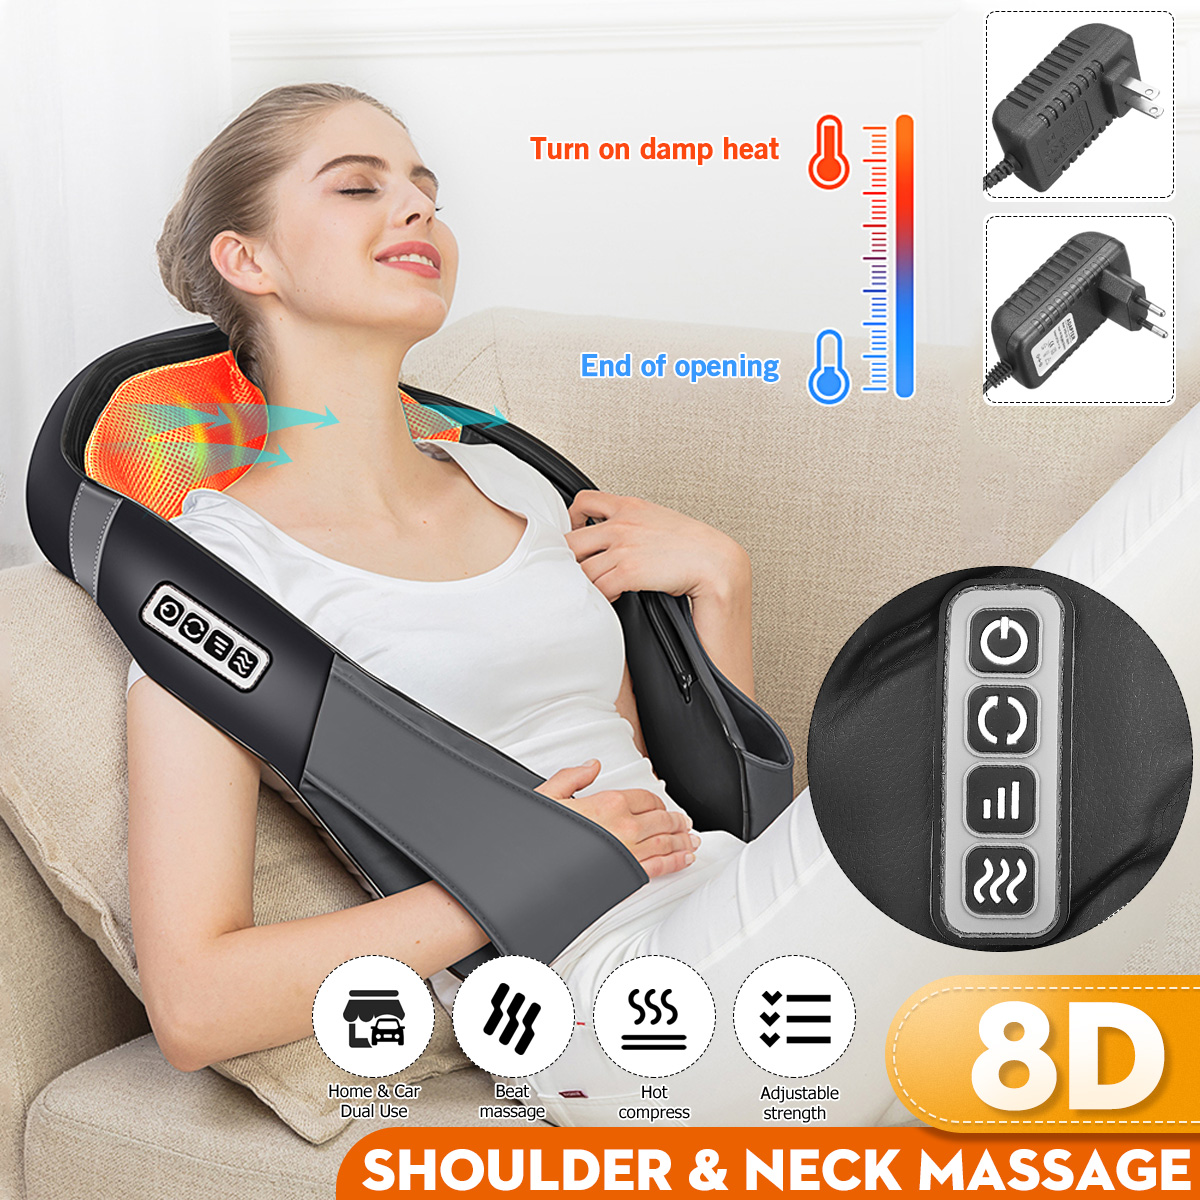 8D-Eletcric-Neck-Heating-Massager-Deep-Kneading-Massage-Pillow-for-Shoulder-Neck-Back-1812367-2